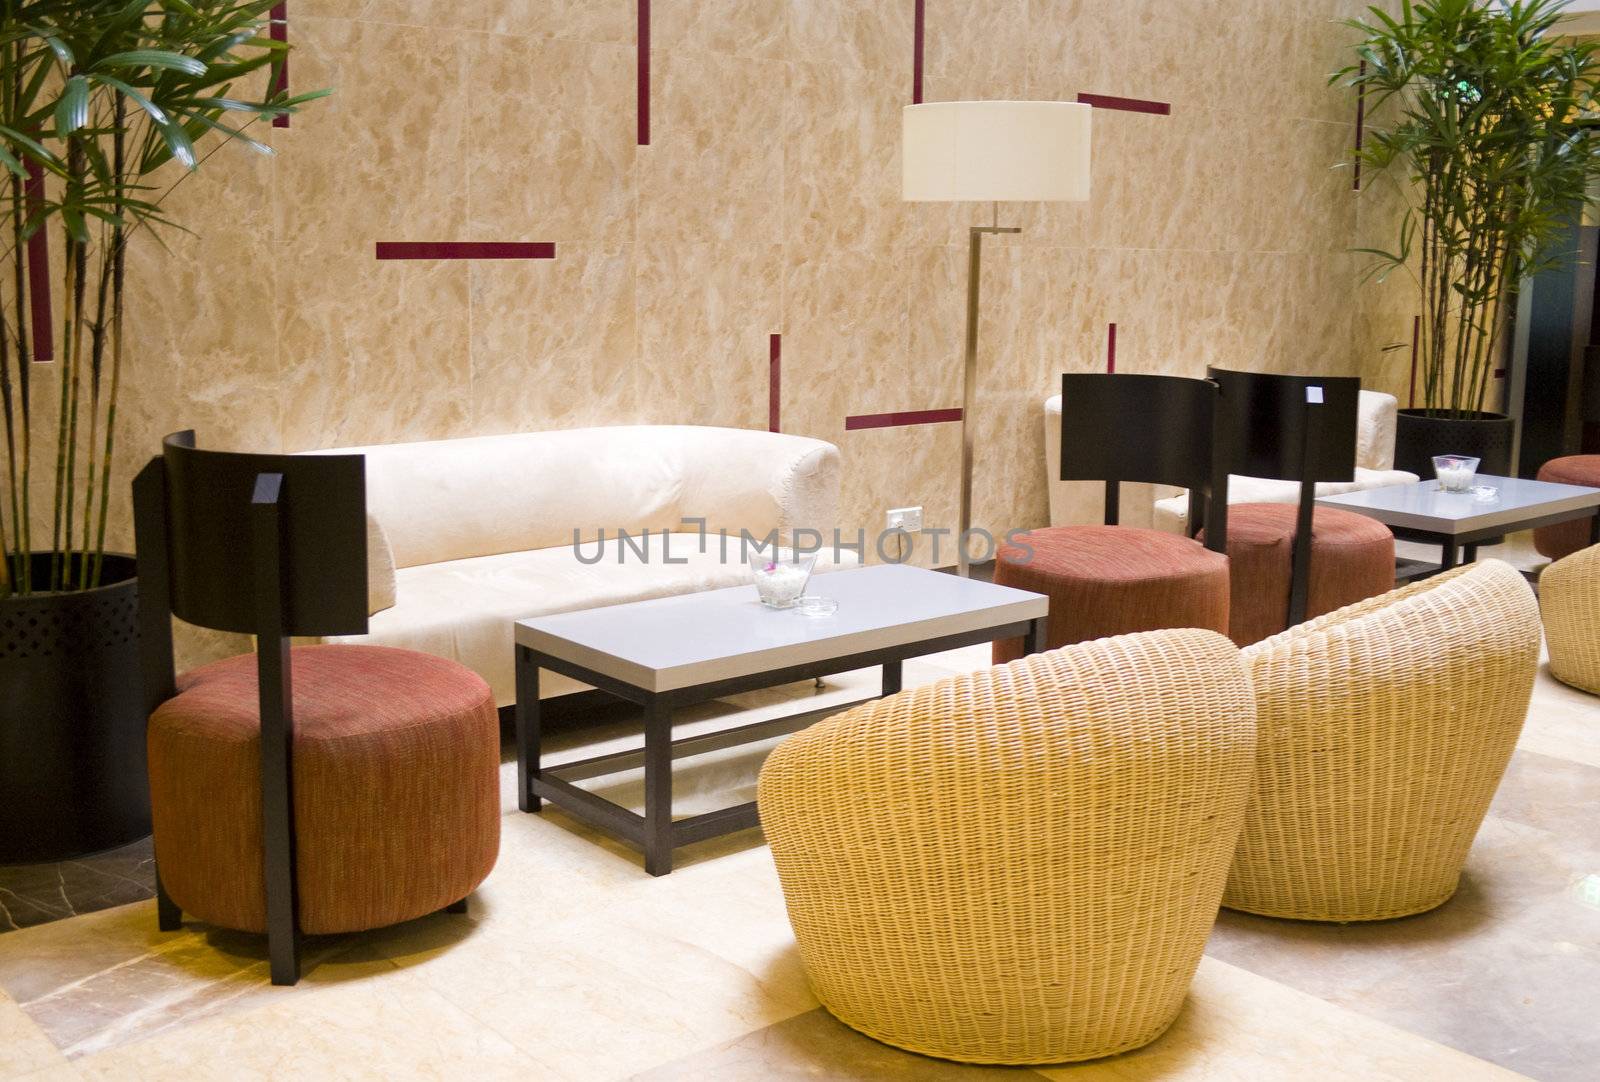 Image of a modern lounge.